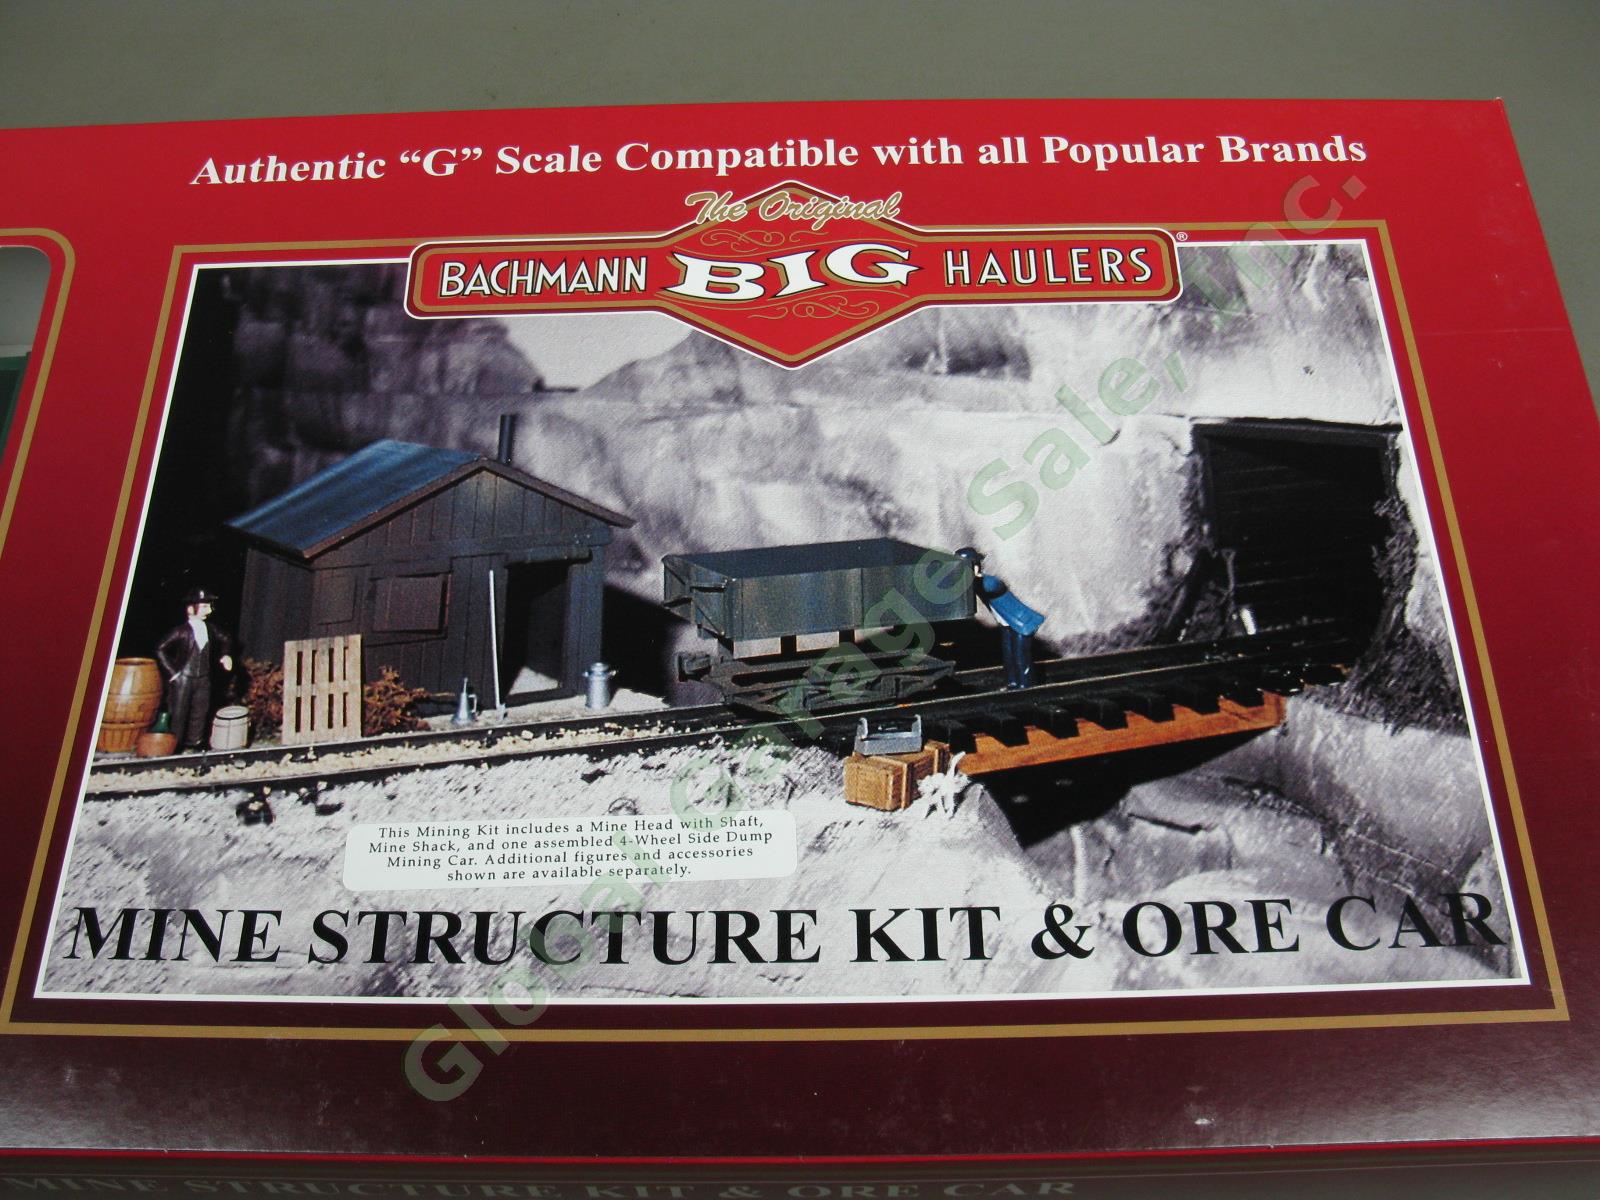 NEW Sealed Bachmann Big Haulers G-Scale Train Mine Structure Kit & Ore Car 92501 1